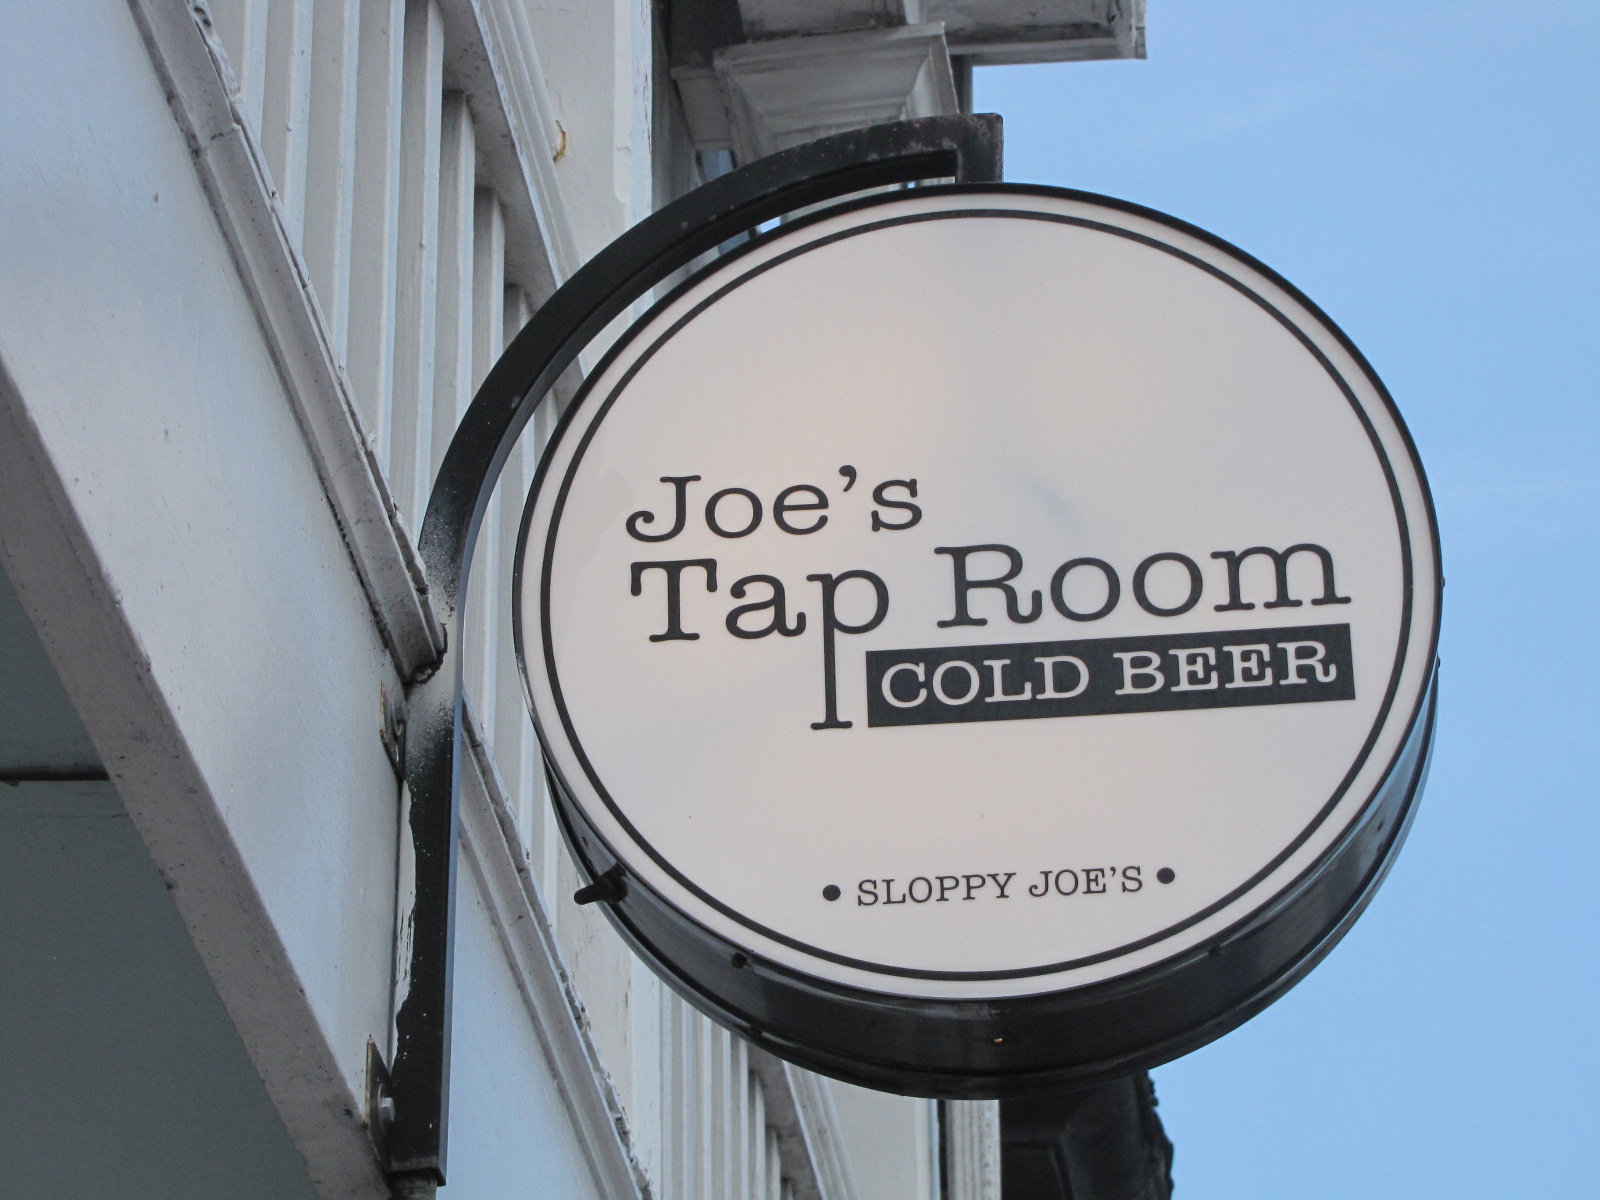 Joe's tap room